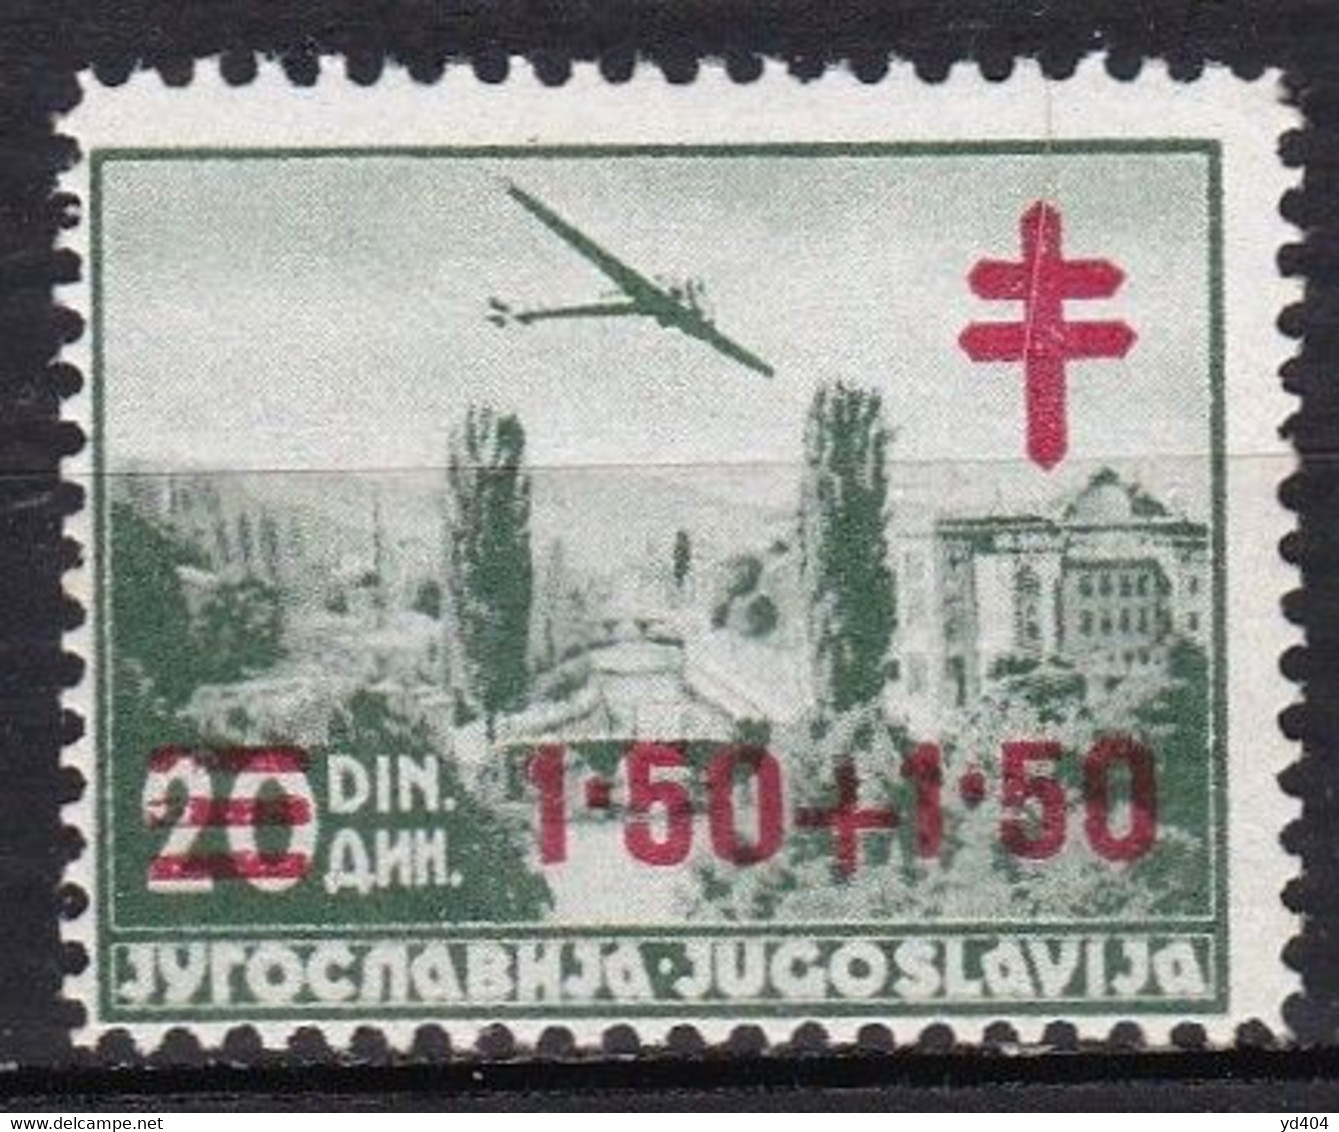 YU429 – YOUGOSLAVIA – AIRMAIL - 1940 – ANTI-T.B. FUND – SG # 448 MNH 2,50 € - Luftpost